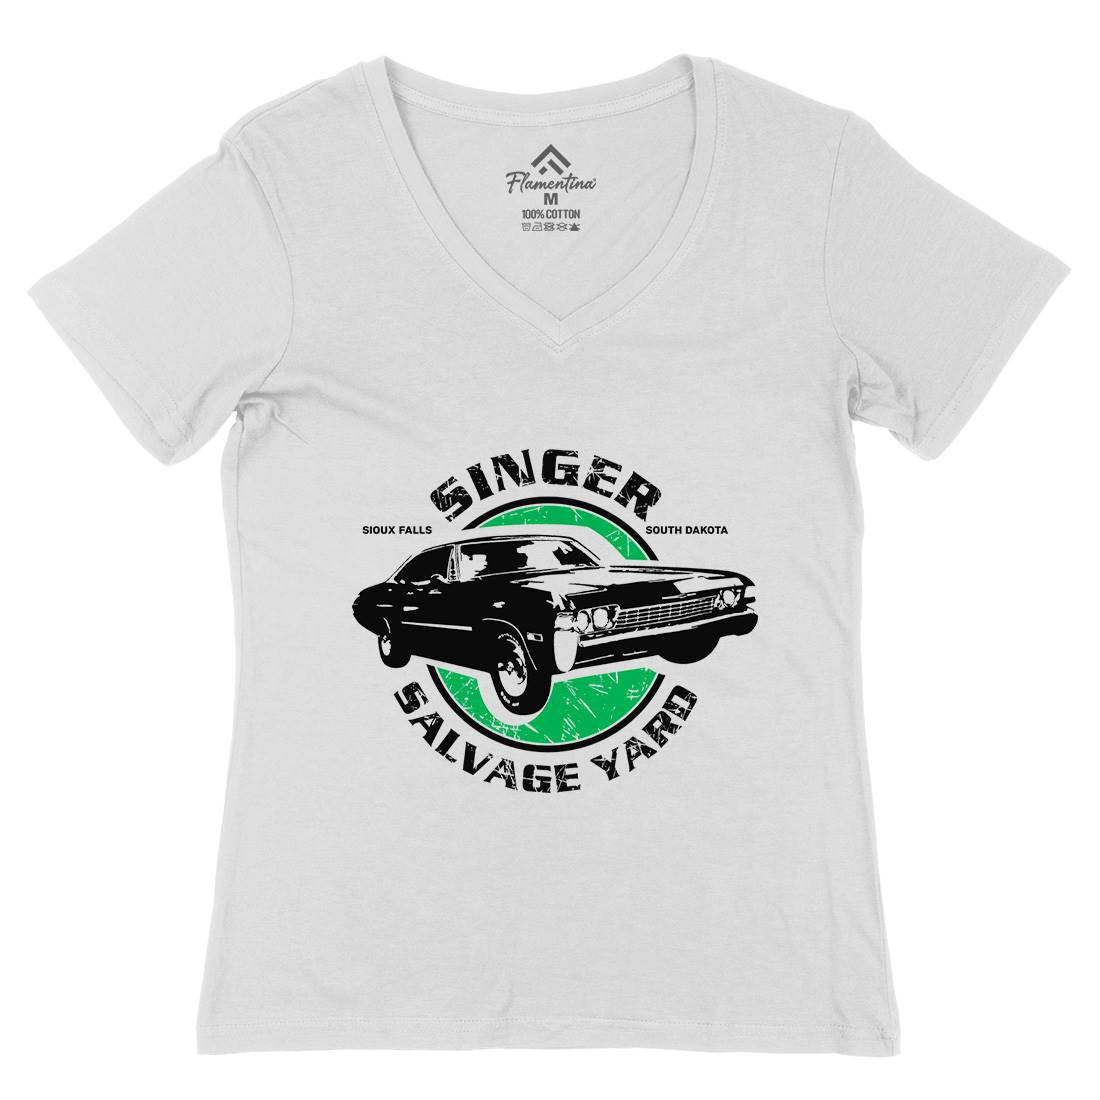 Singer Salvage Yard Womens Organic V-Neck T-Shirt Cars D377